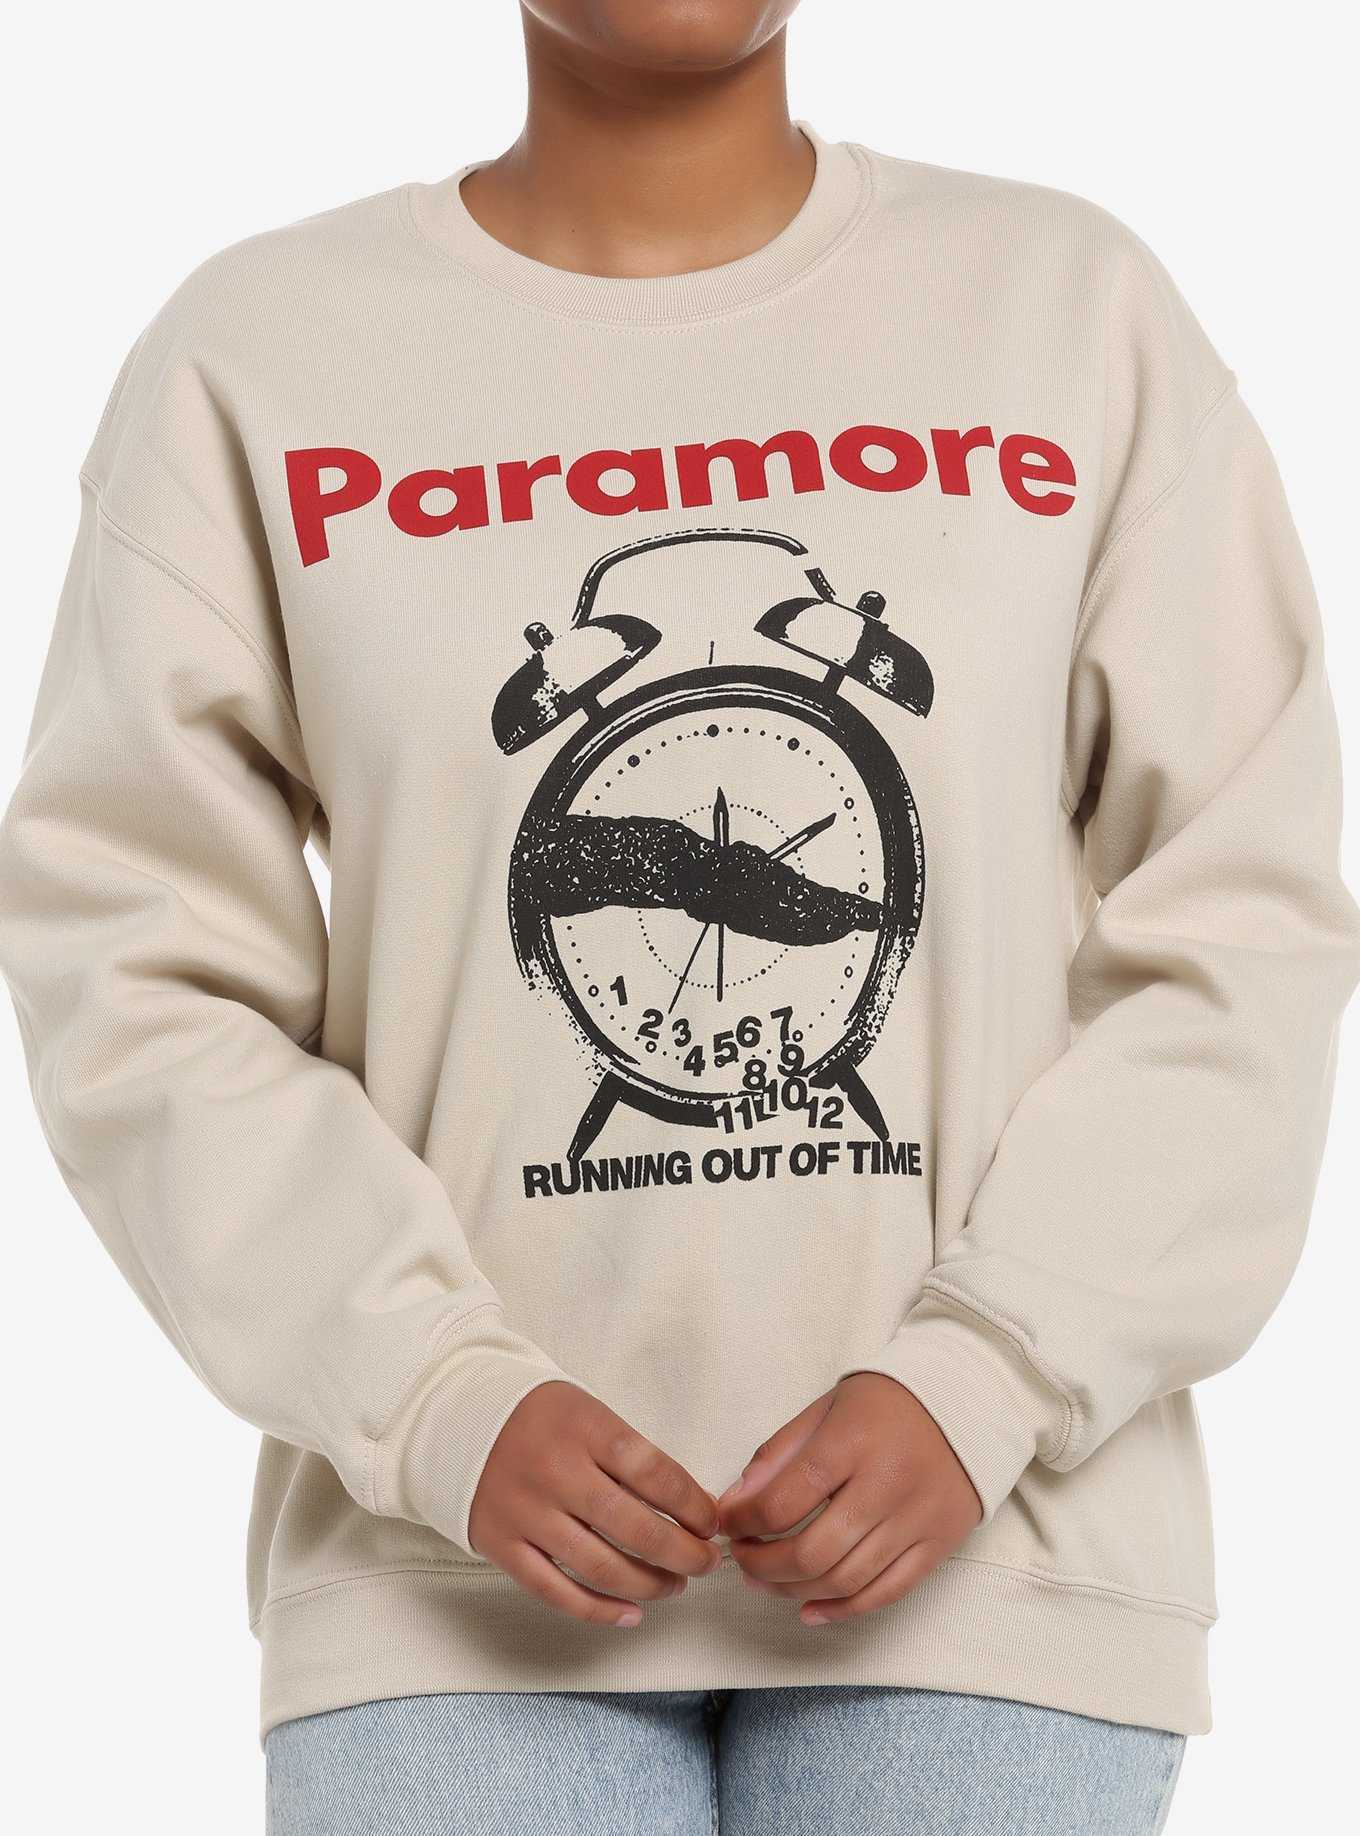 Paramore Doodle Art Shirt, Paramore Band Merch - Unleash Your